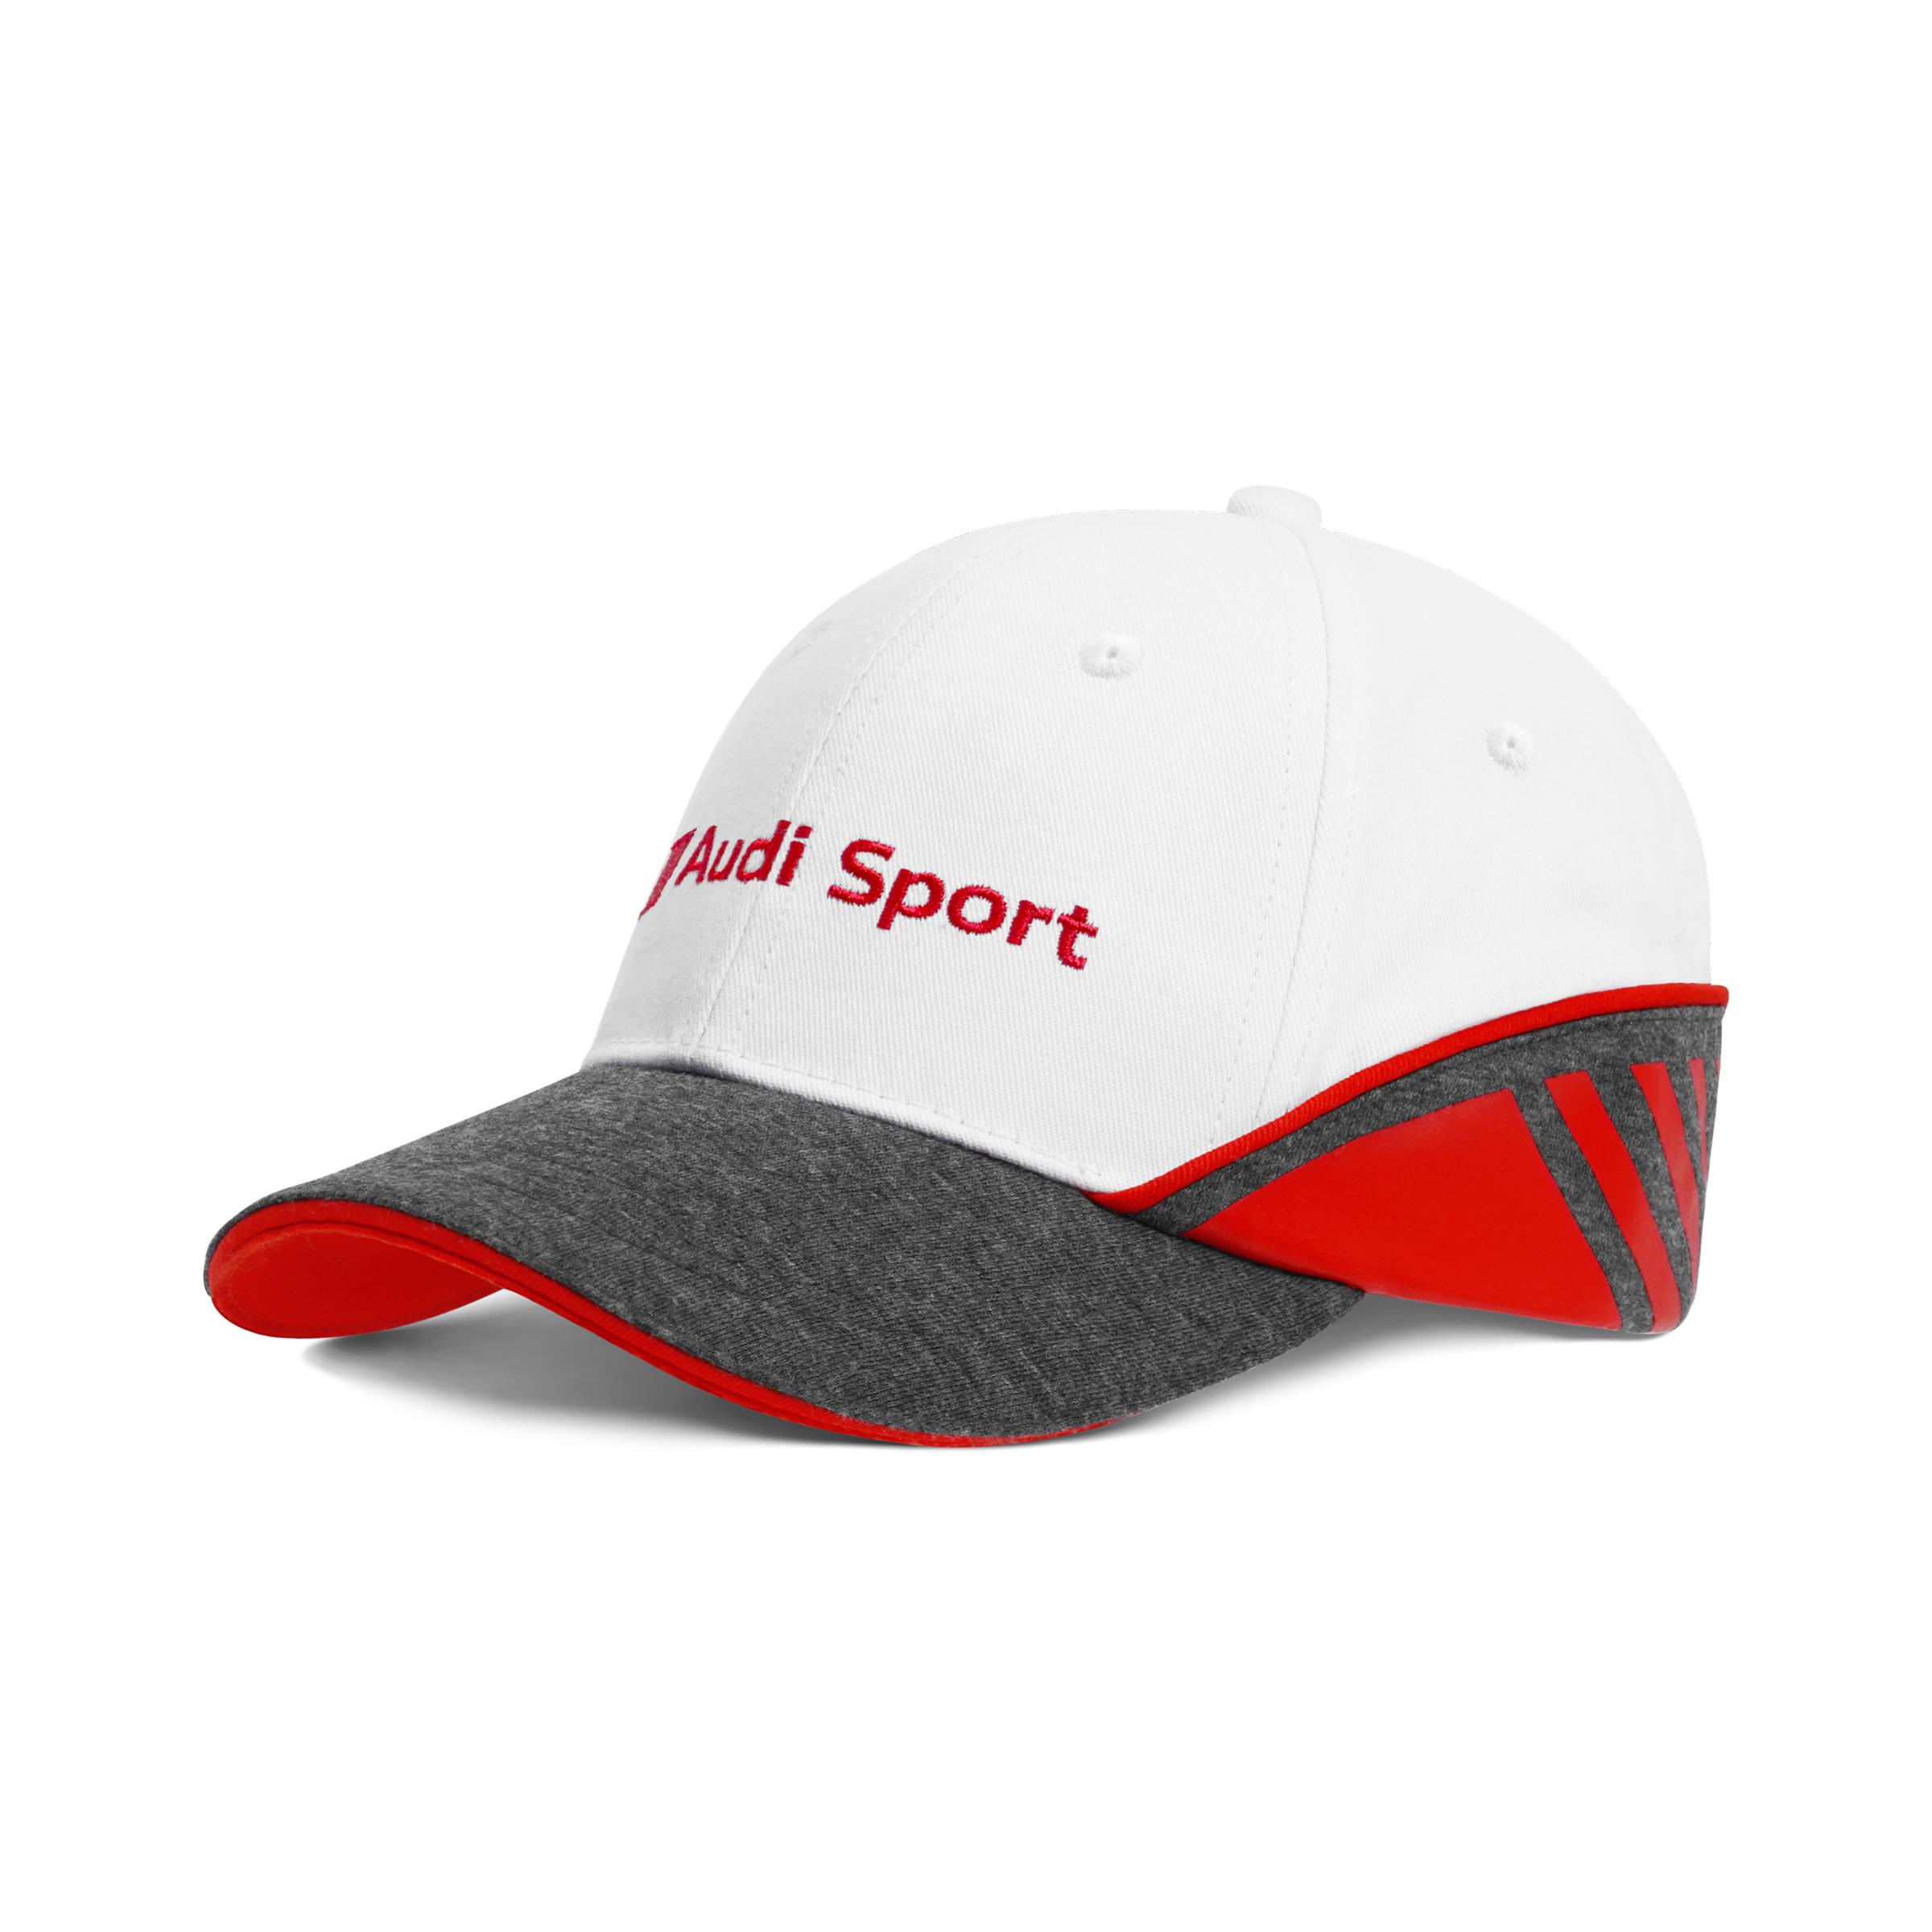 Original Audi Sport Cap, Kleinkinder, rot Baseballcap Baseballkappe Basecap Kindercap